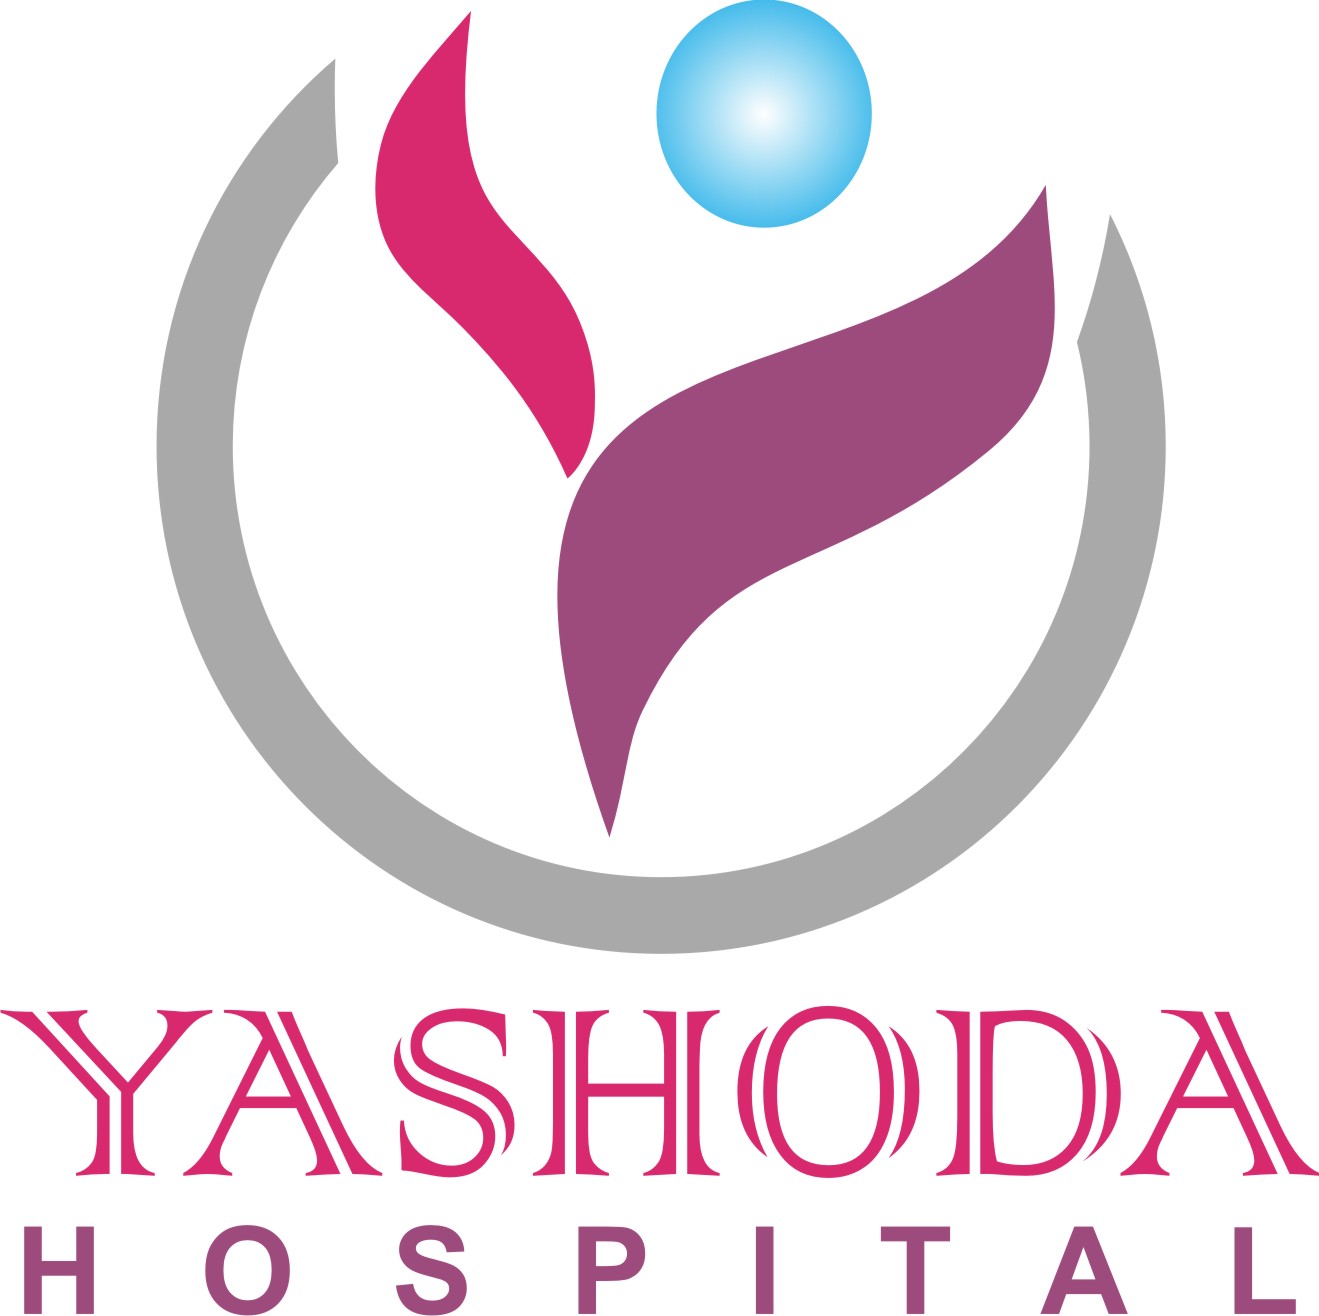 Yashoda Hospital - Logo